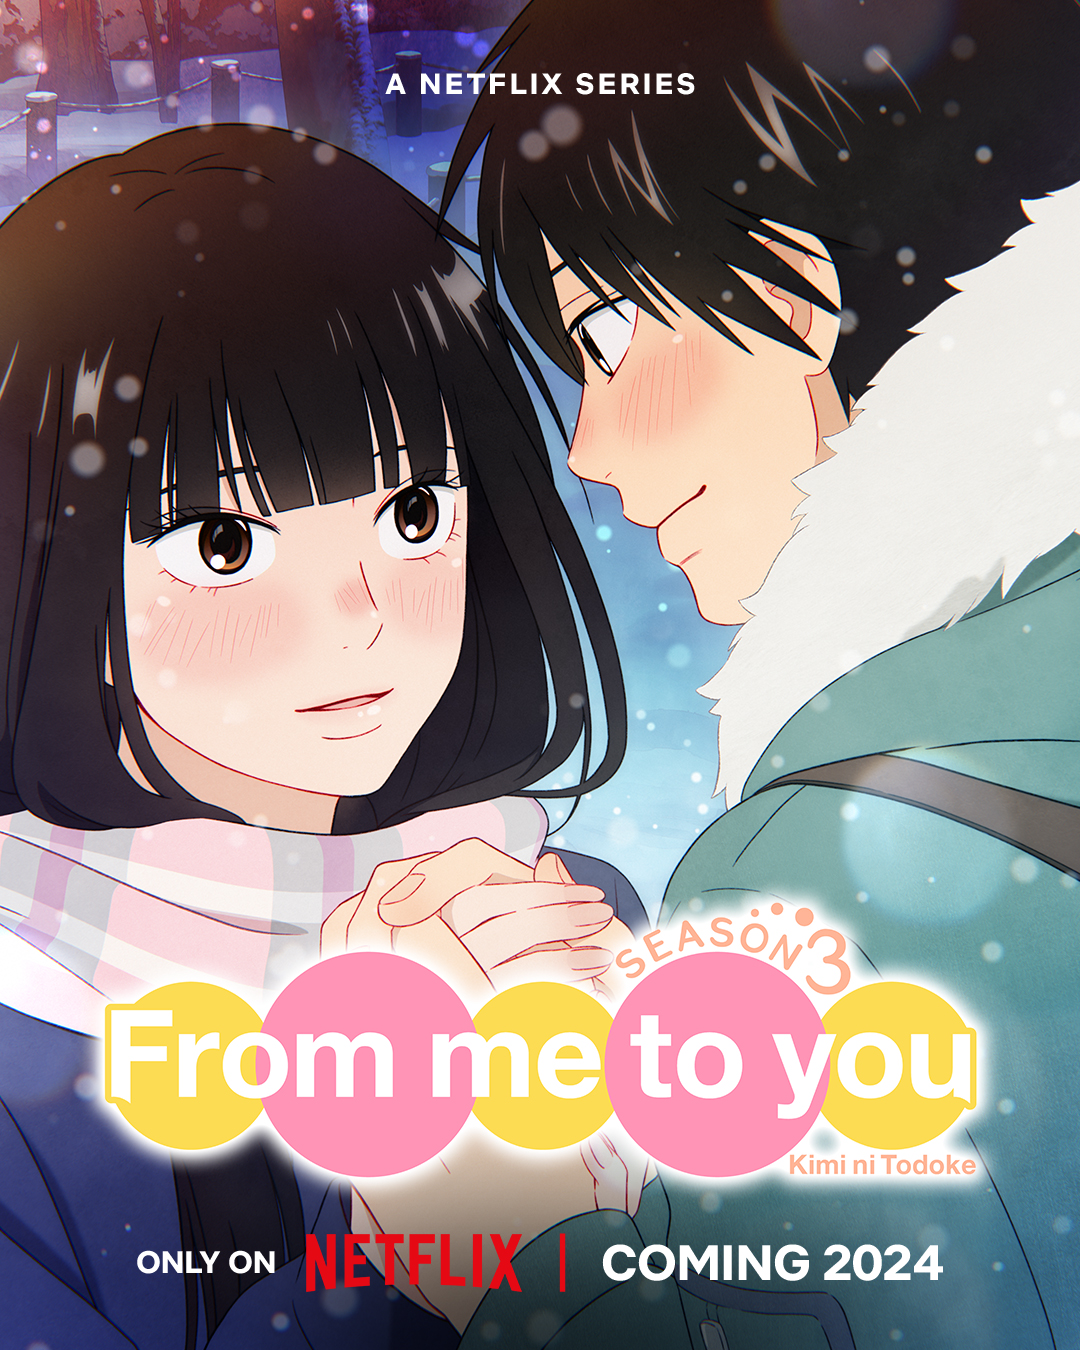 Kimi ni Todoke: From Me to You / Netflix